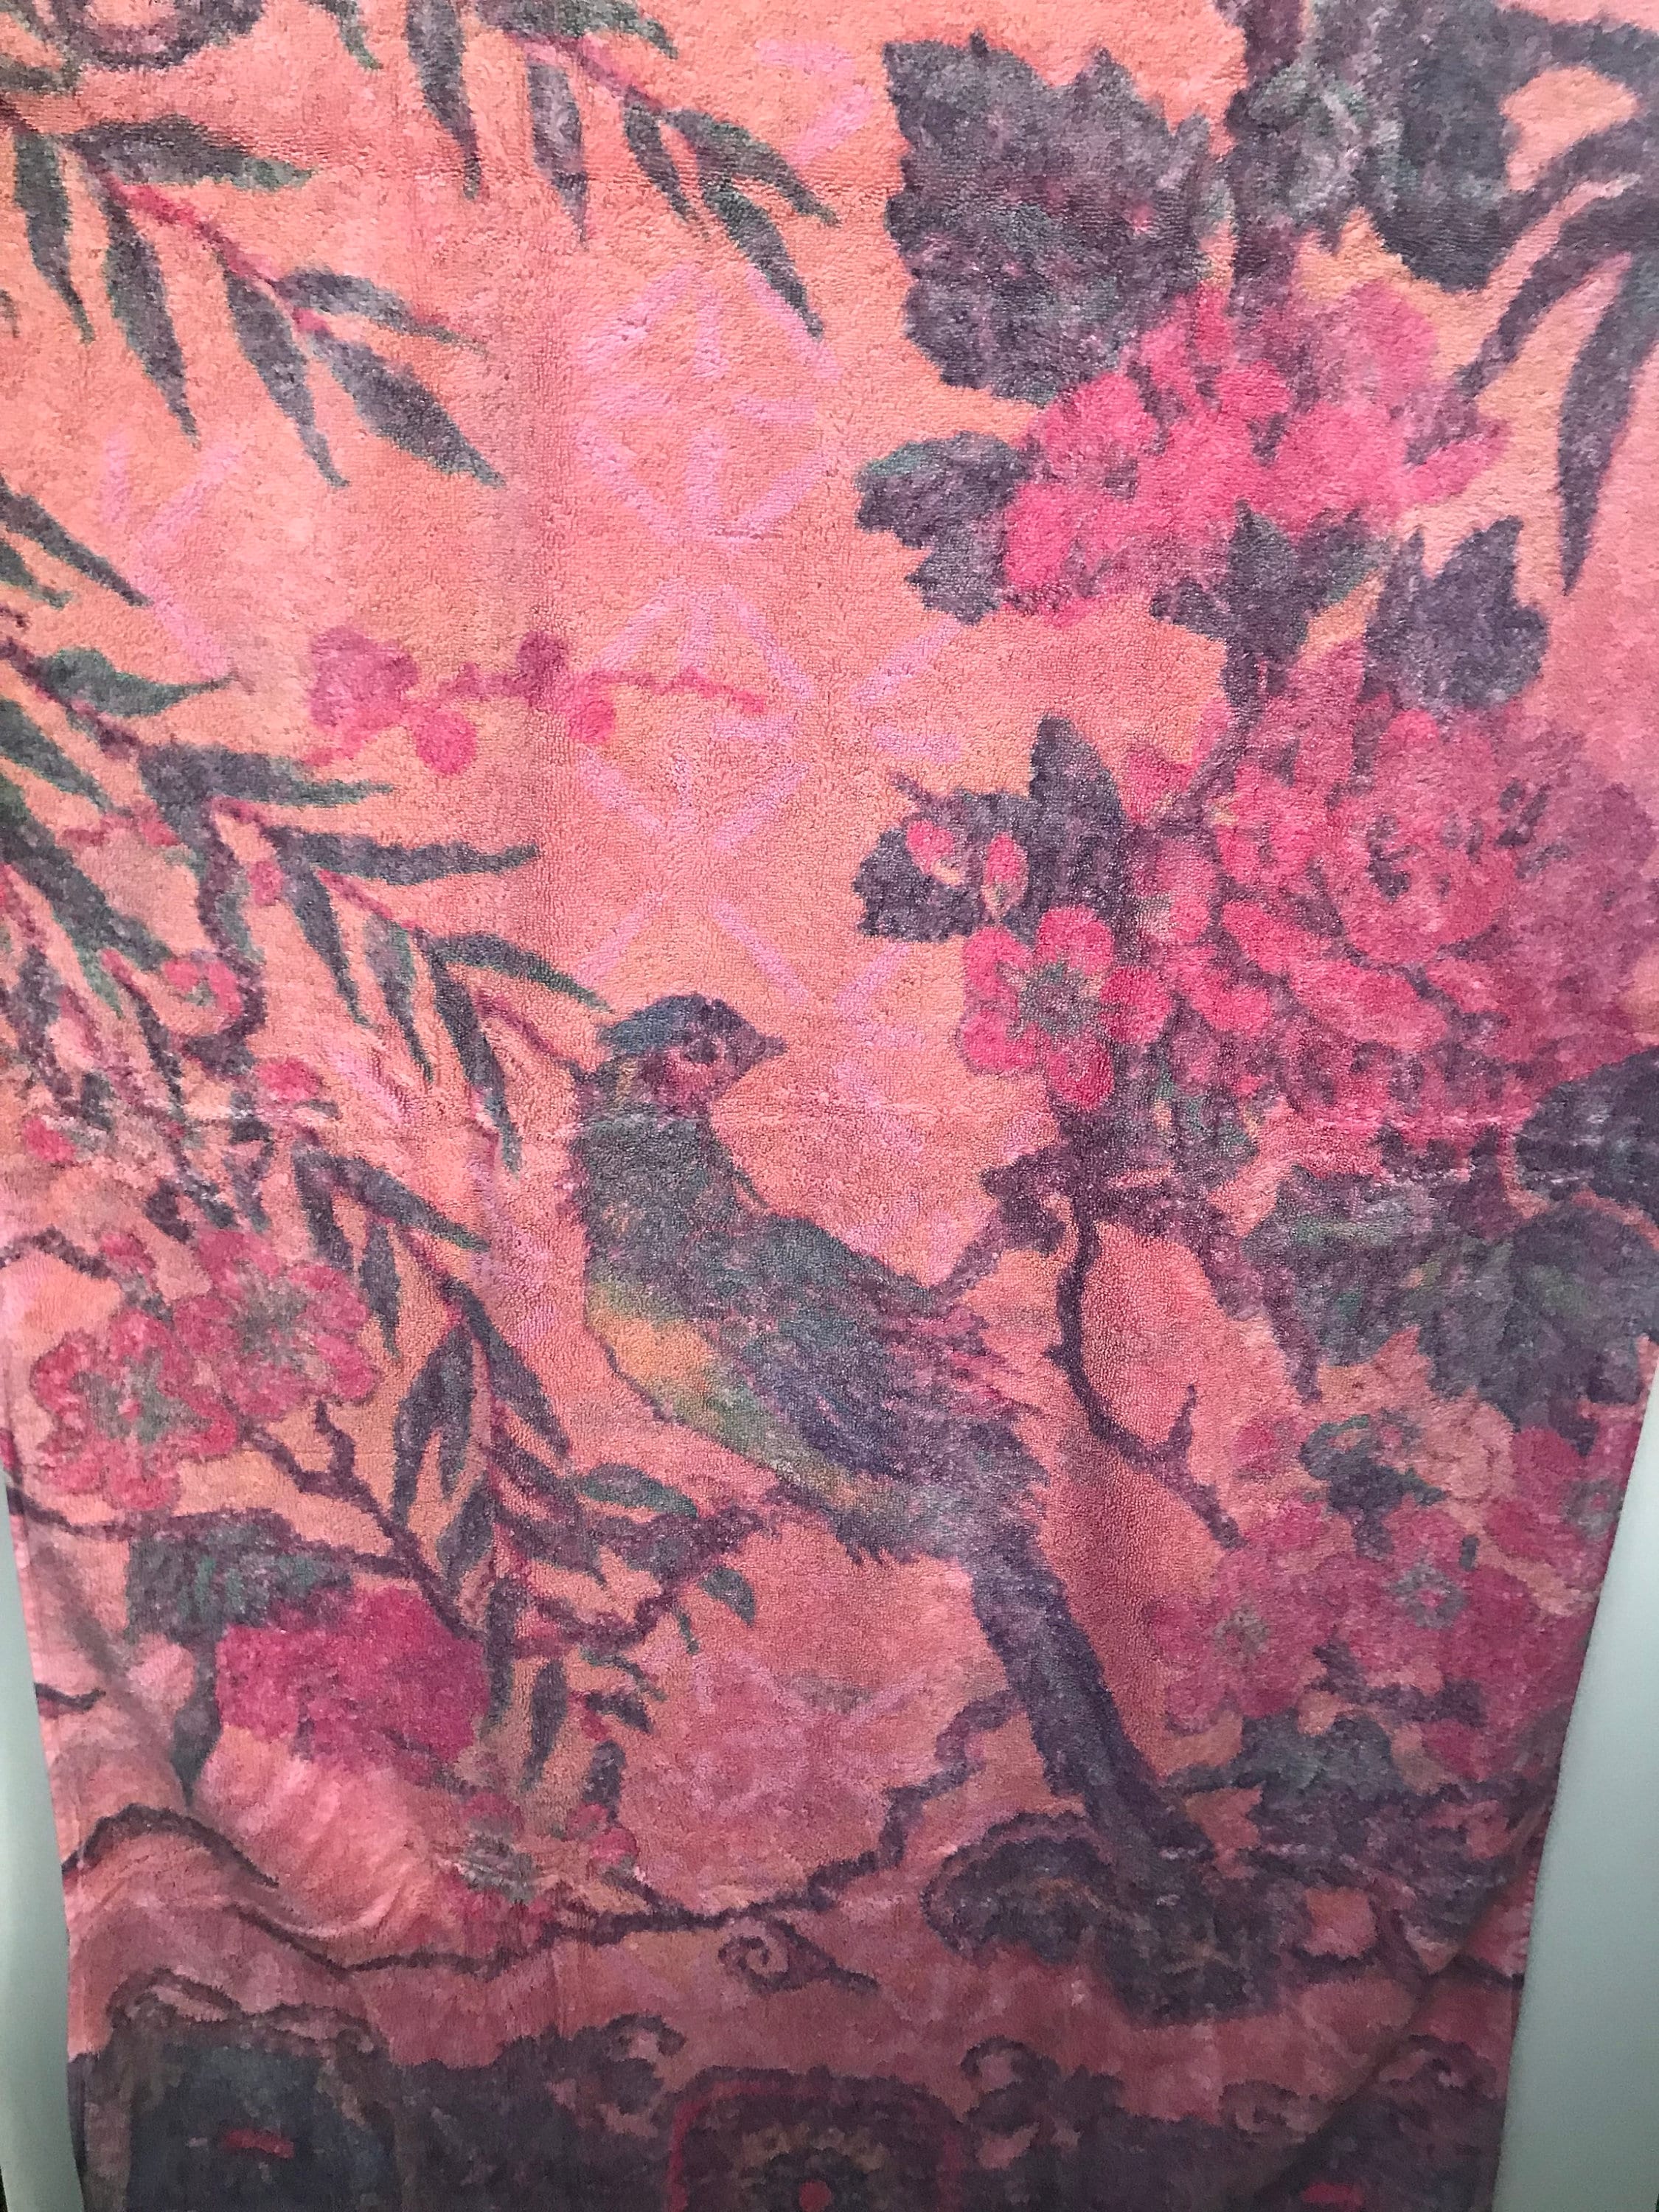 Details about   Fresco Towels Tropical Peacock Blush Bath Towel BY ARTISTICO TOWELS